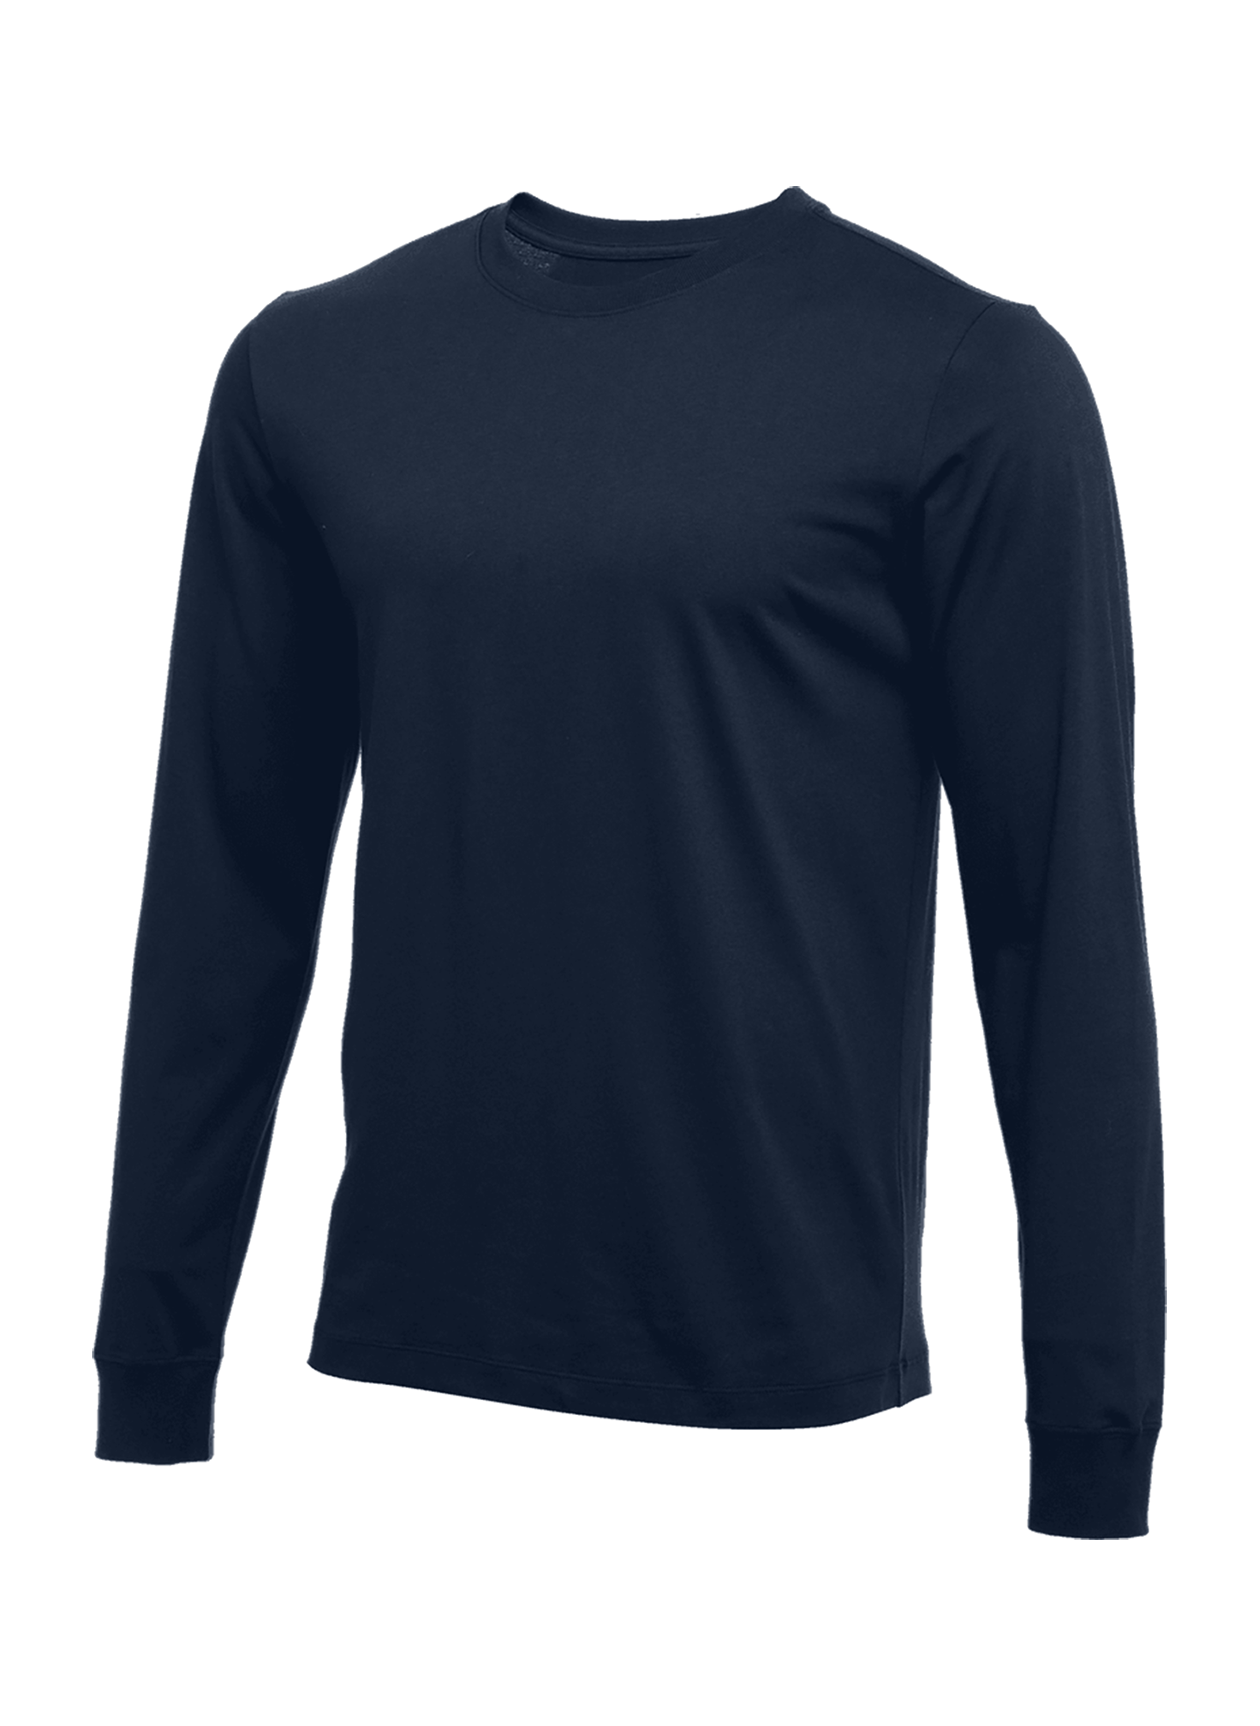 Nike Men's College Navy Long-Sleeve T-Shirt